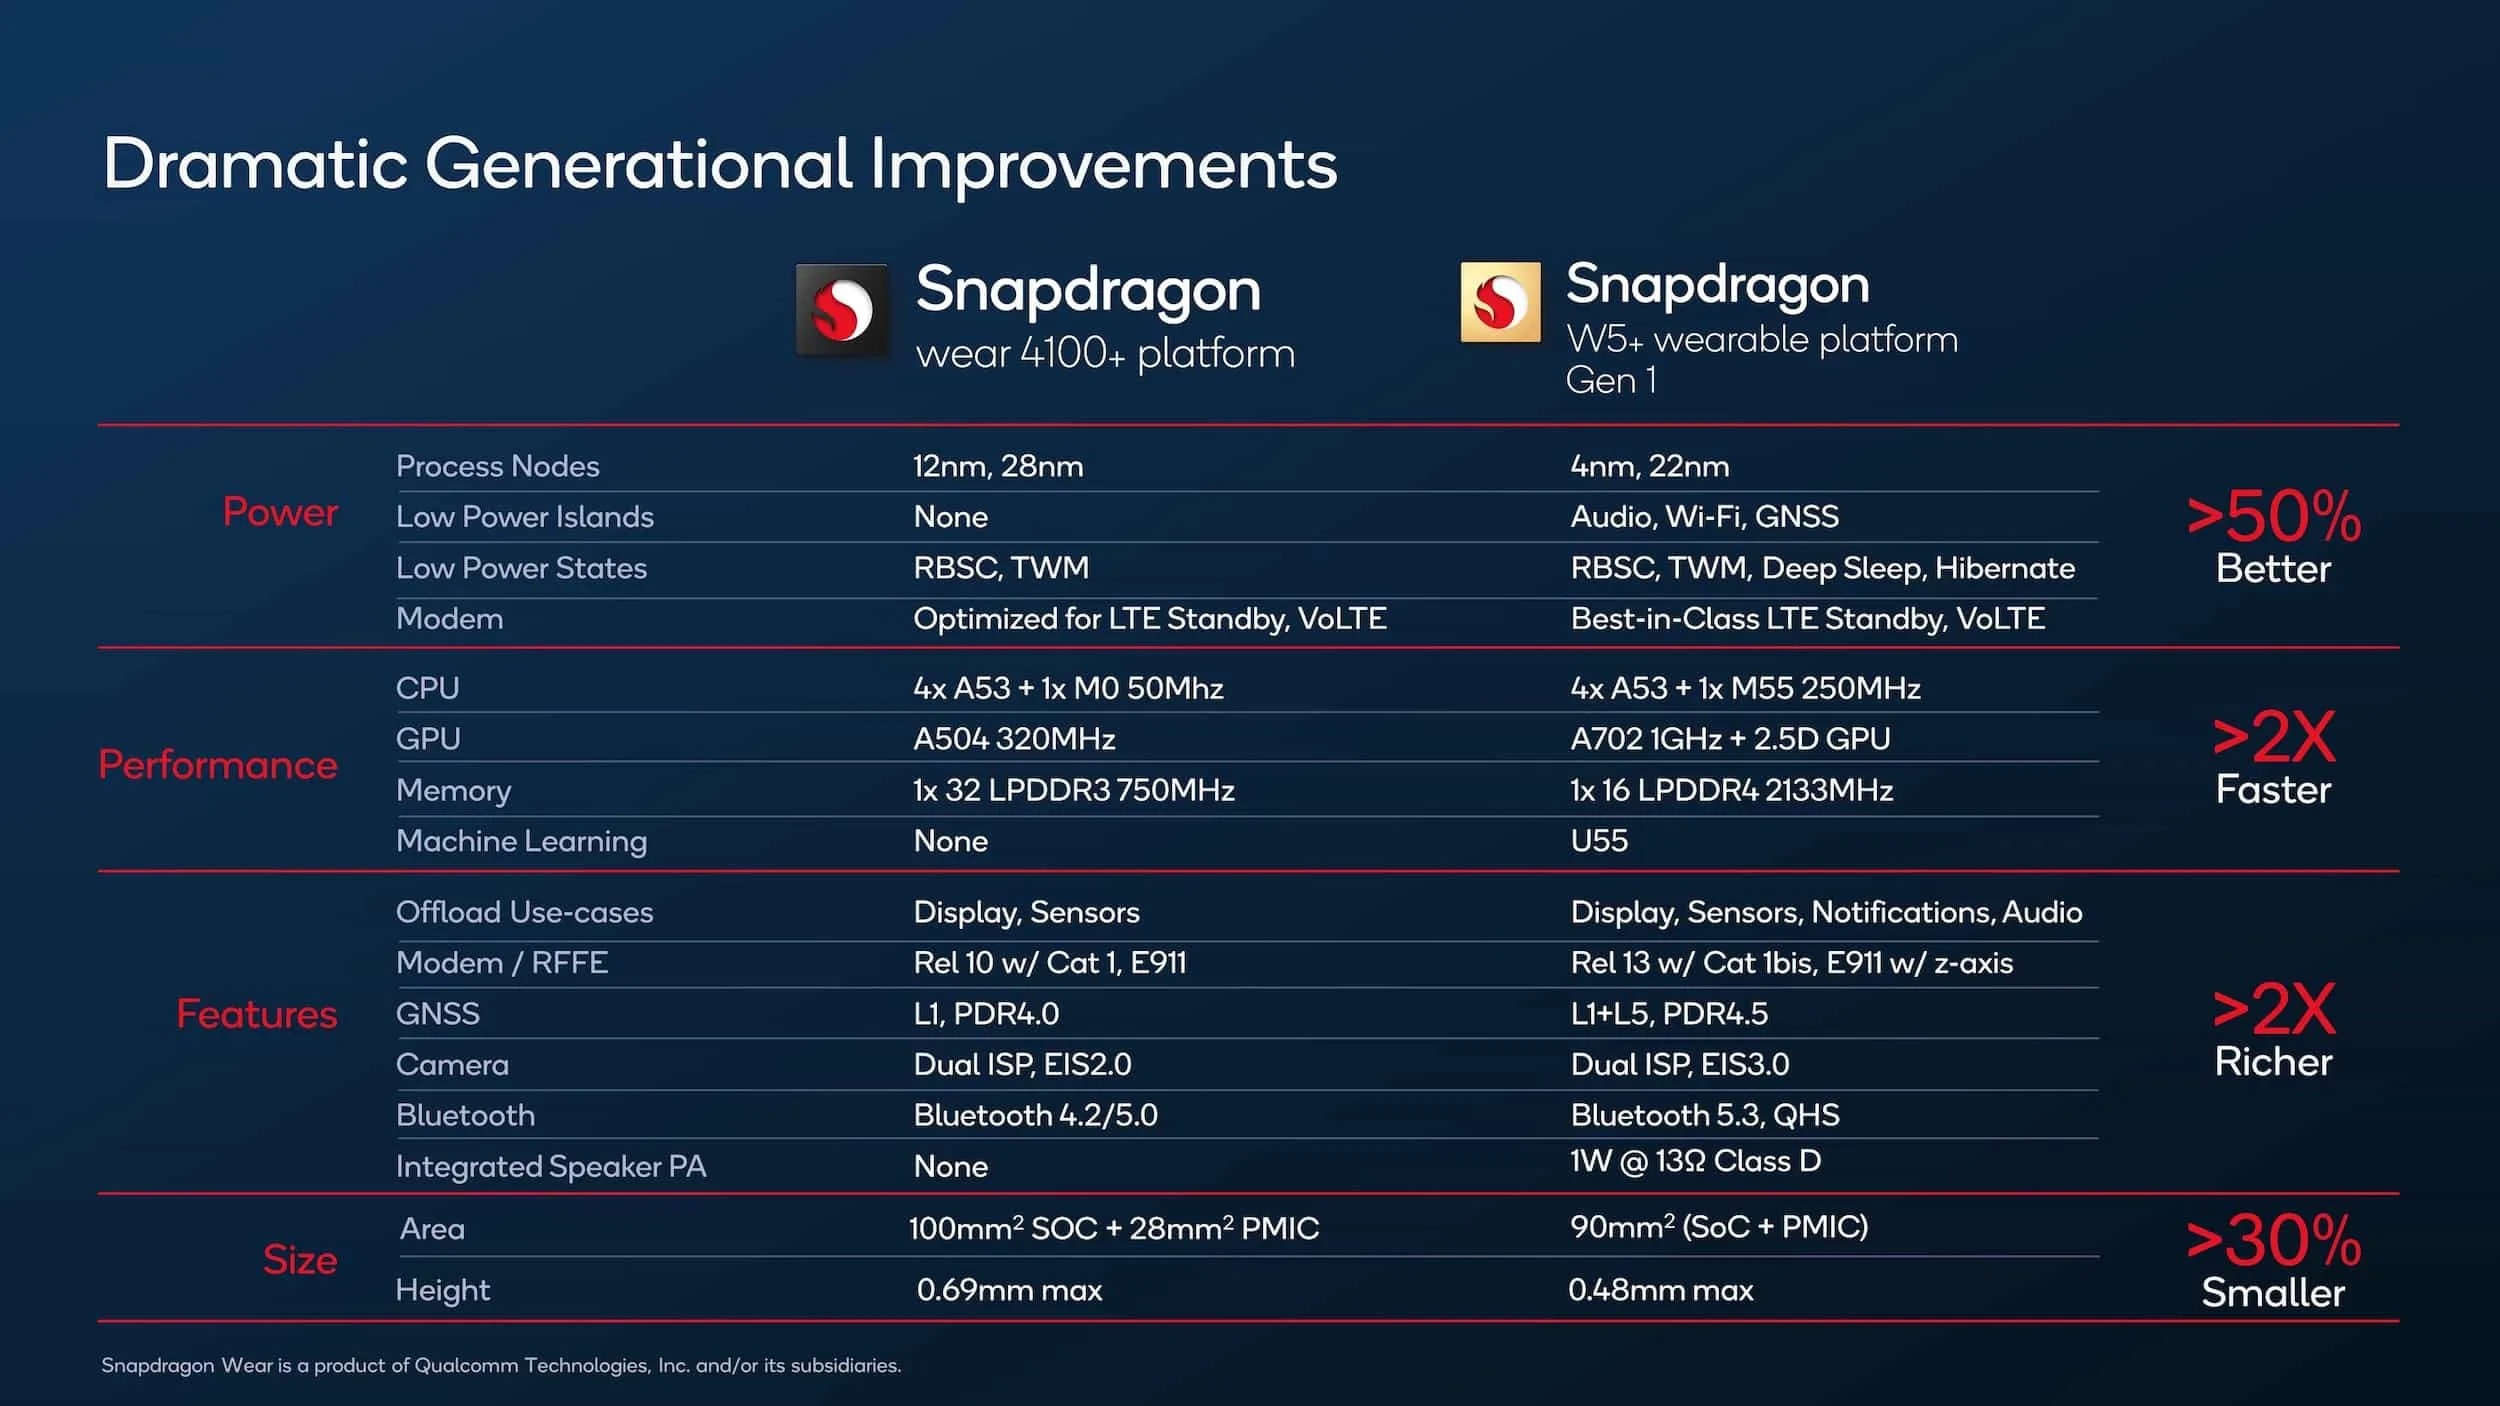 Snapdragon W5+ Gen 1 vertailussa edeltävään Snapdragon Wear 4100+:aan.